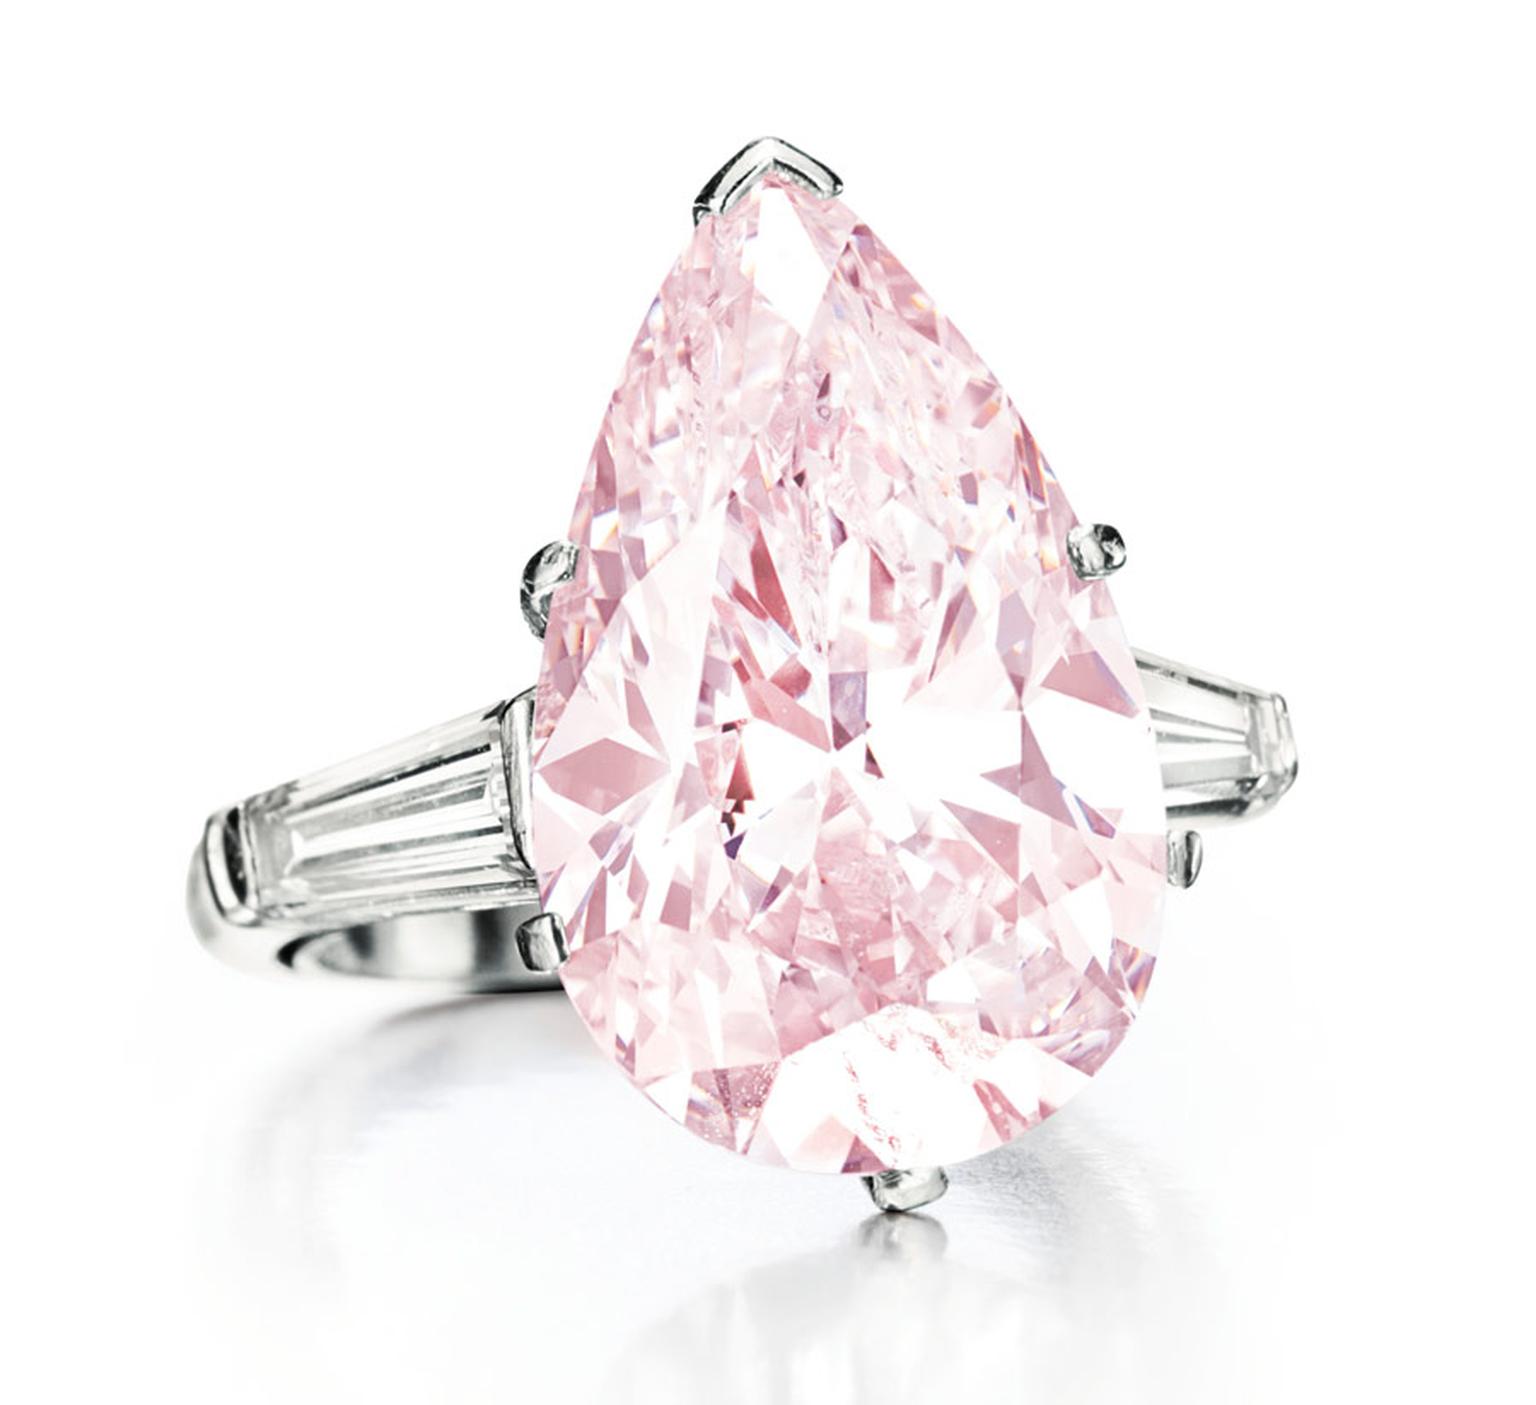 Christies-Pear-Shaped-Fancy-Light-Pink-Diamond-Ring.jpg